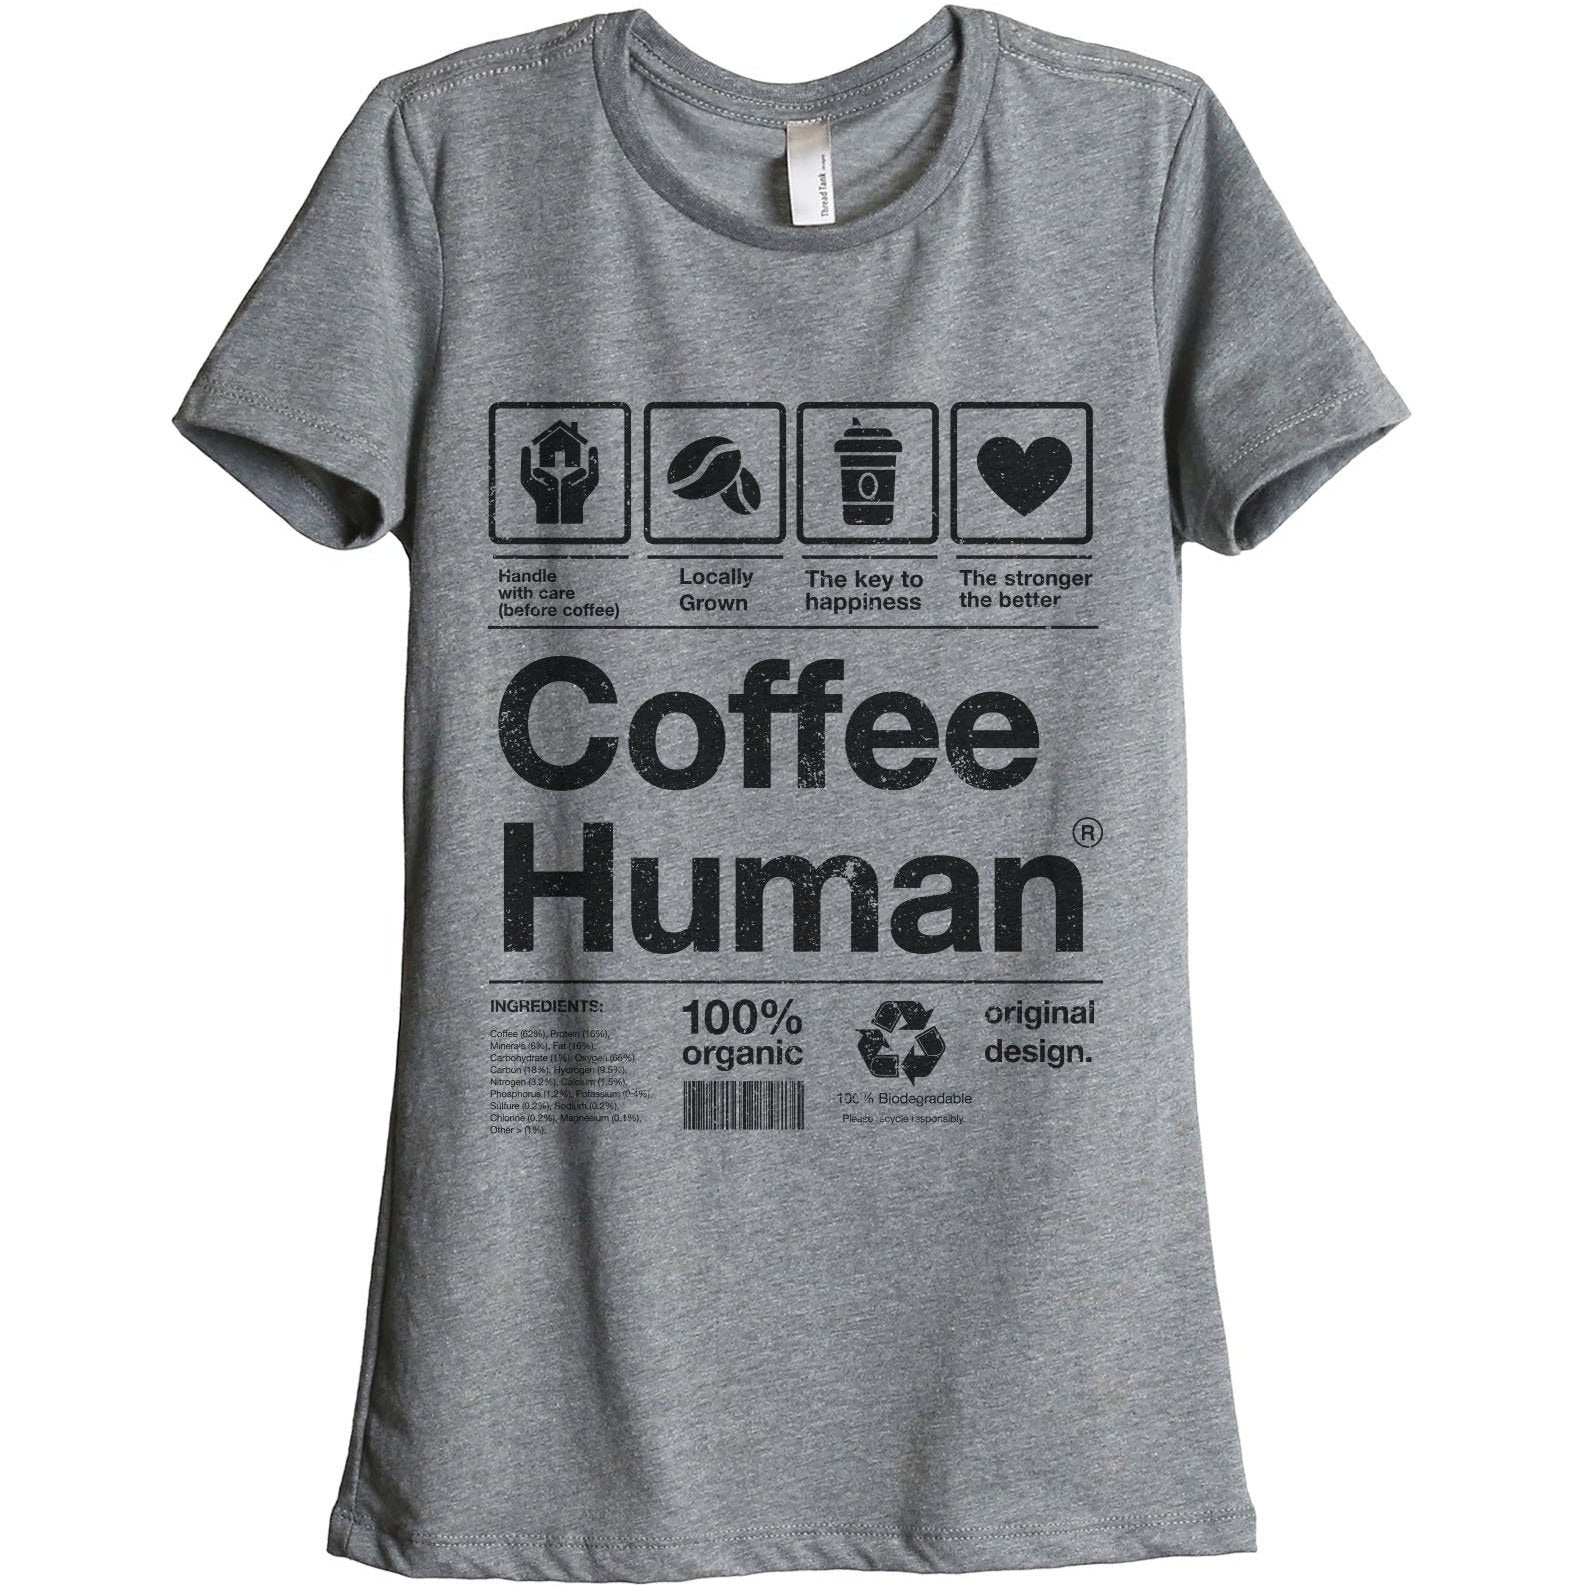 Coffee Human - Thread Tank | Stories You Can Wear | T-Shirts, Tank Tops and Sweatshirts